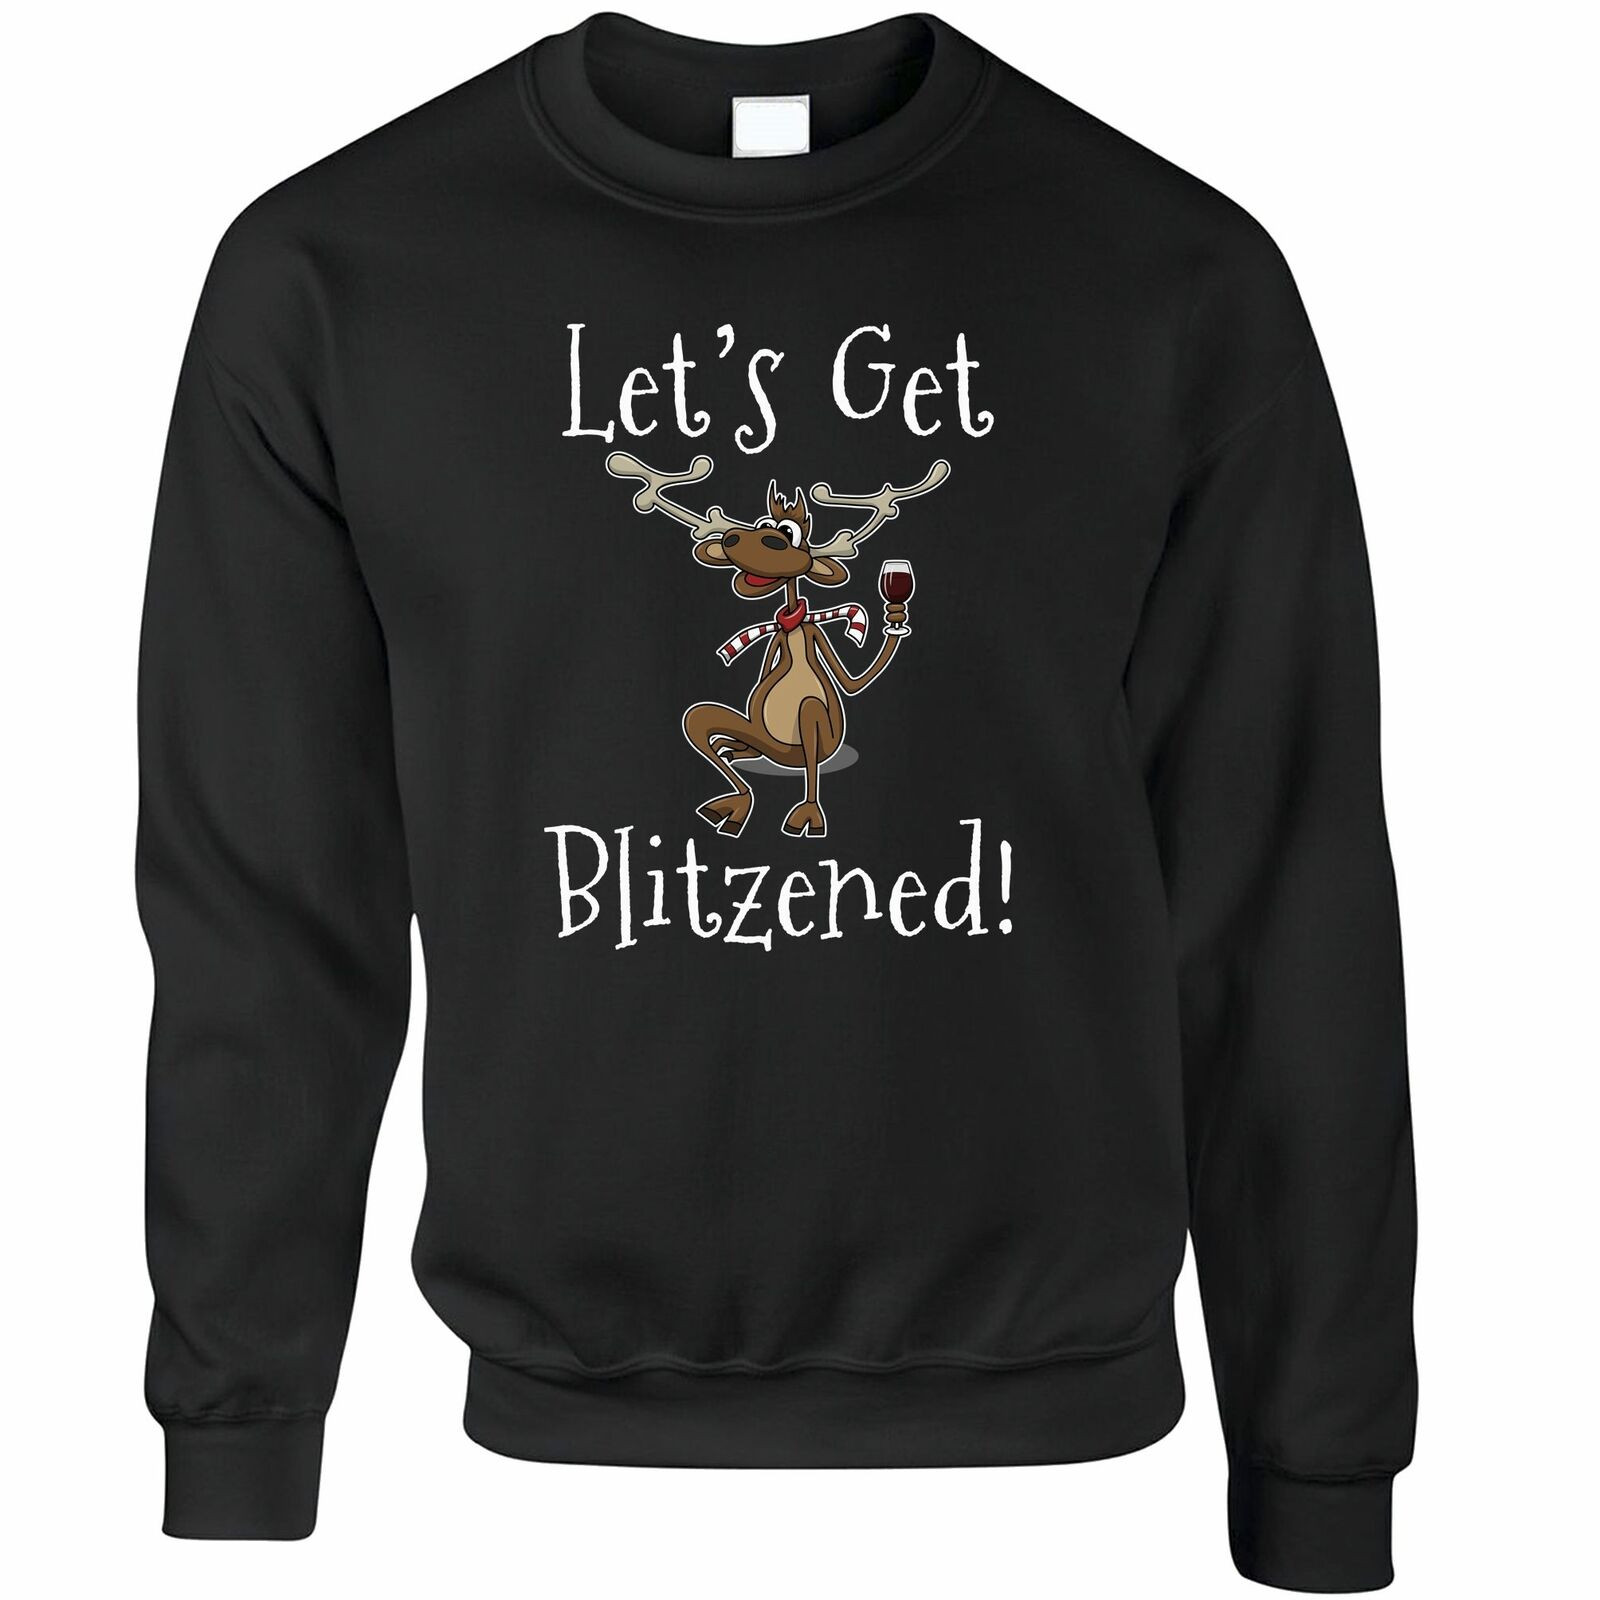 Let's Get Blitzened Christmas sweatshirt Style: Sweatshirt, Color: Black